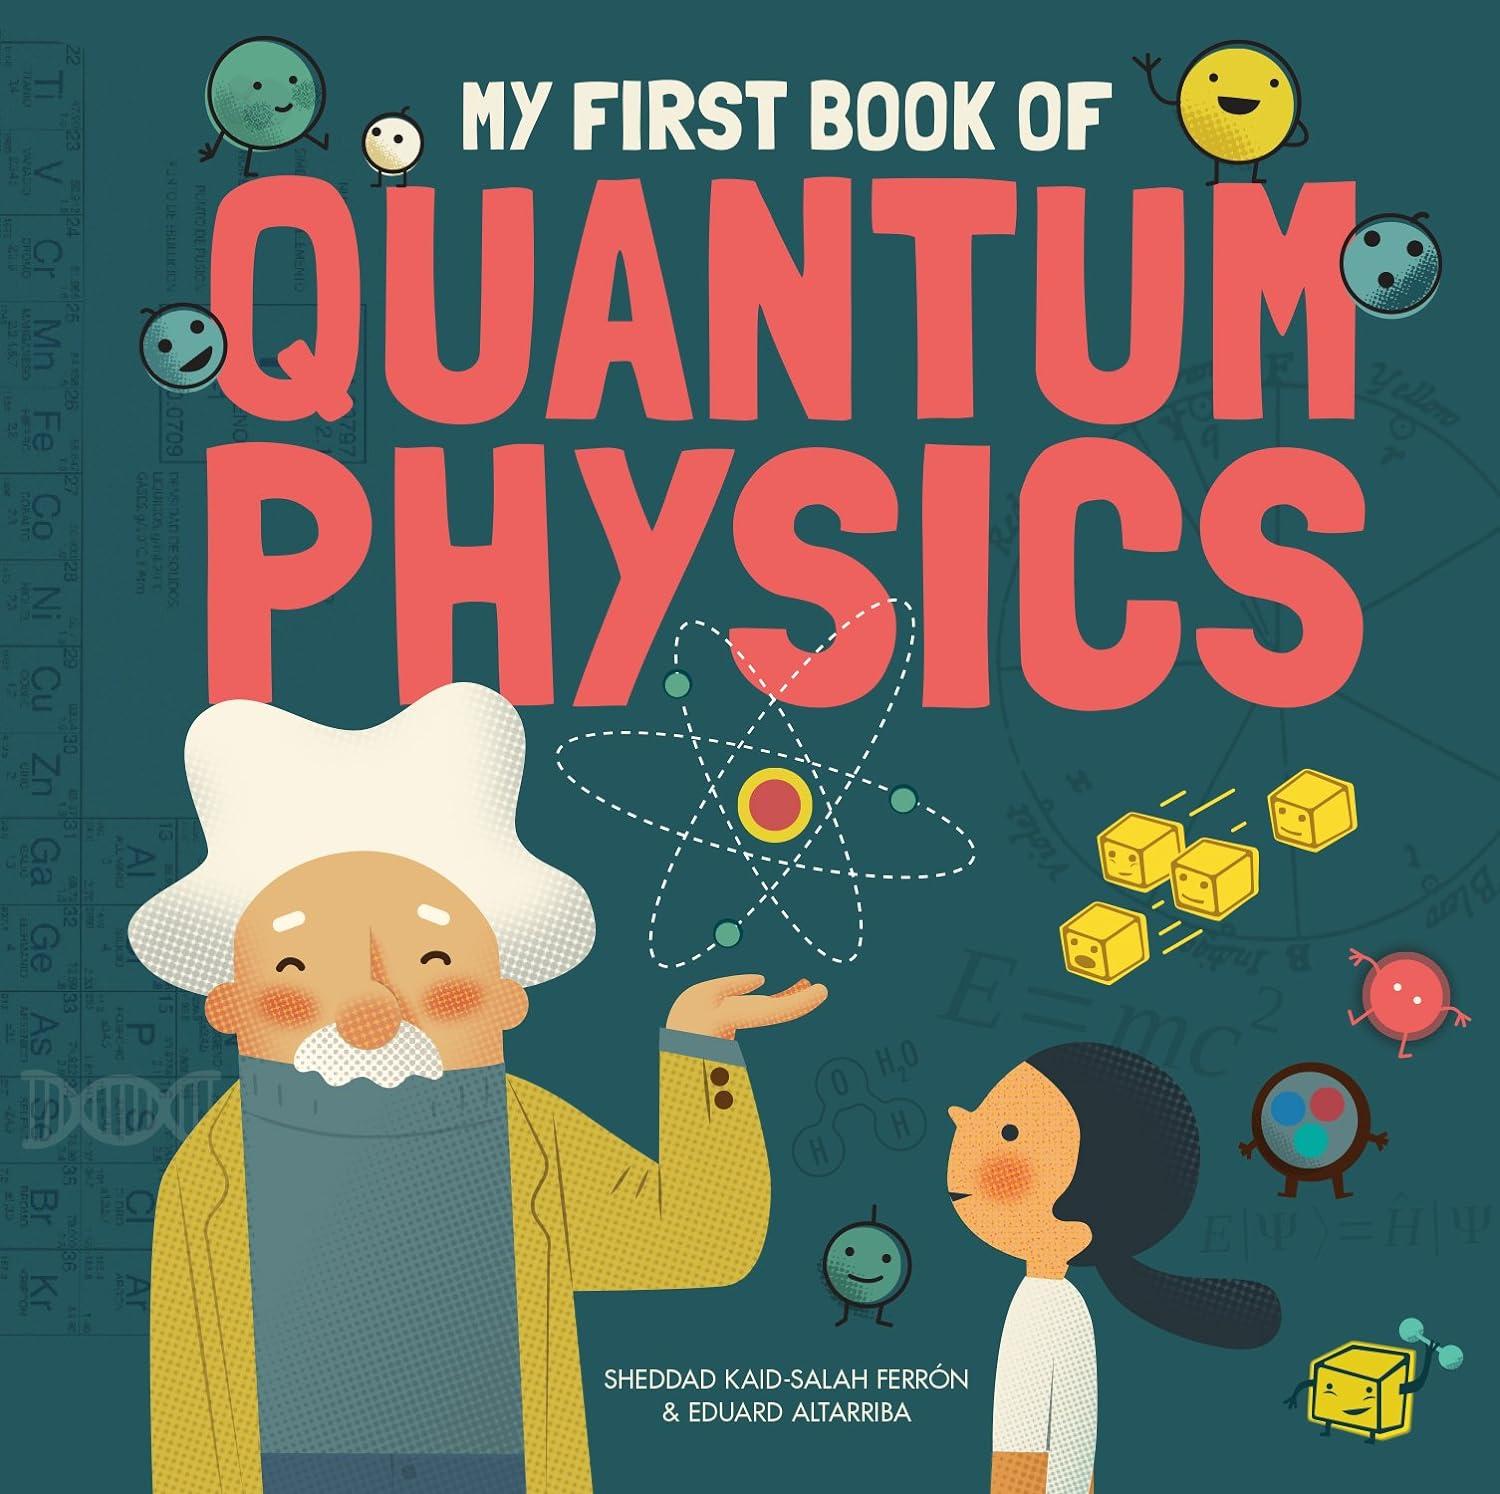 my first book of quantum physics 1st edition kaid-sala ferrón sheddad, eduard altarriba 1787080137,